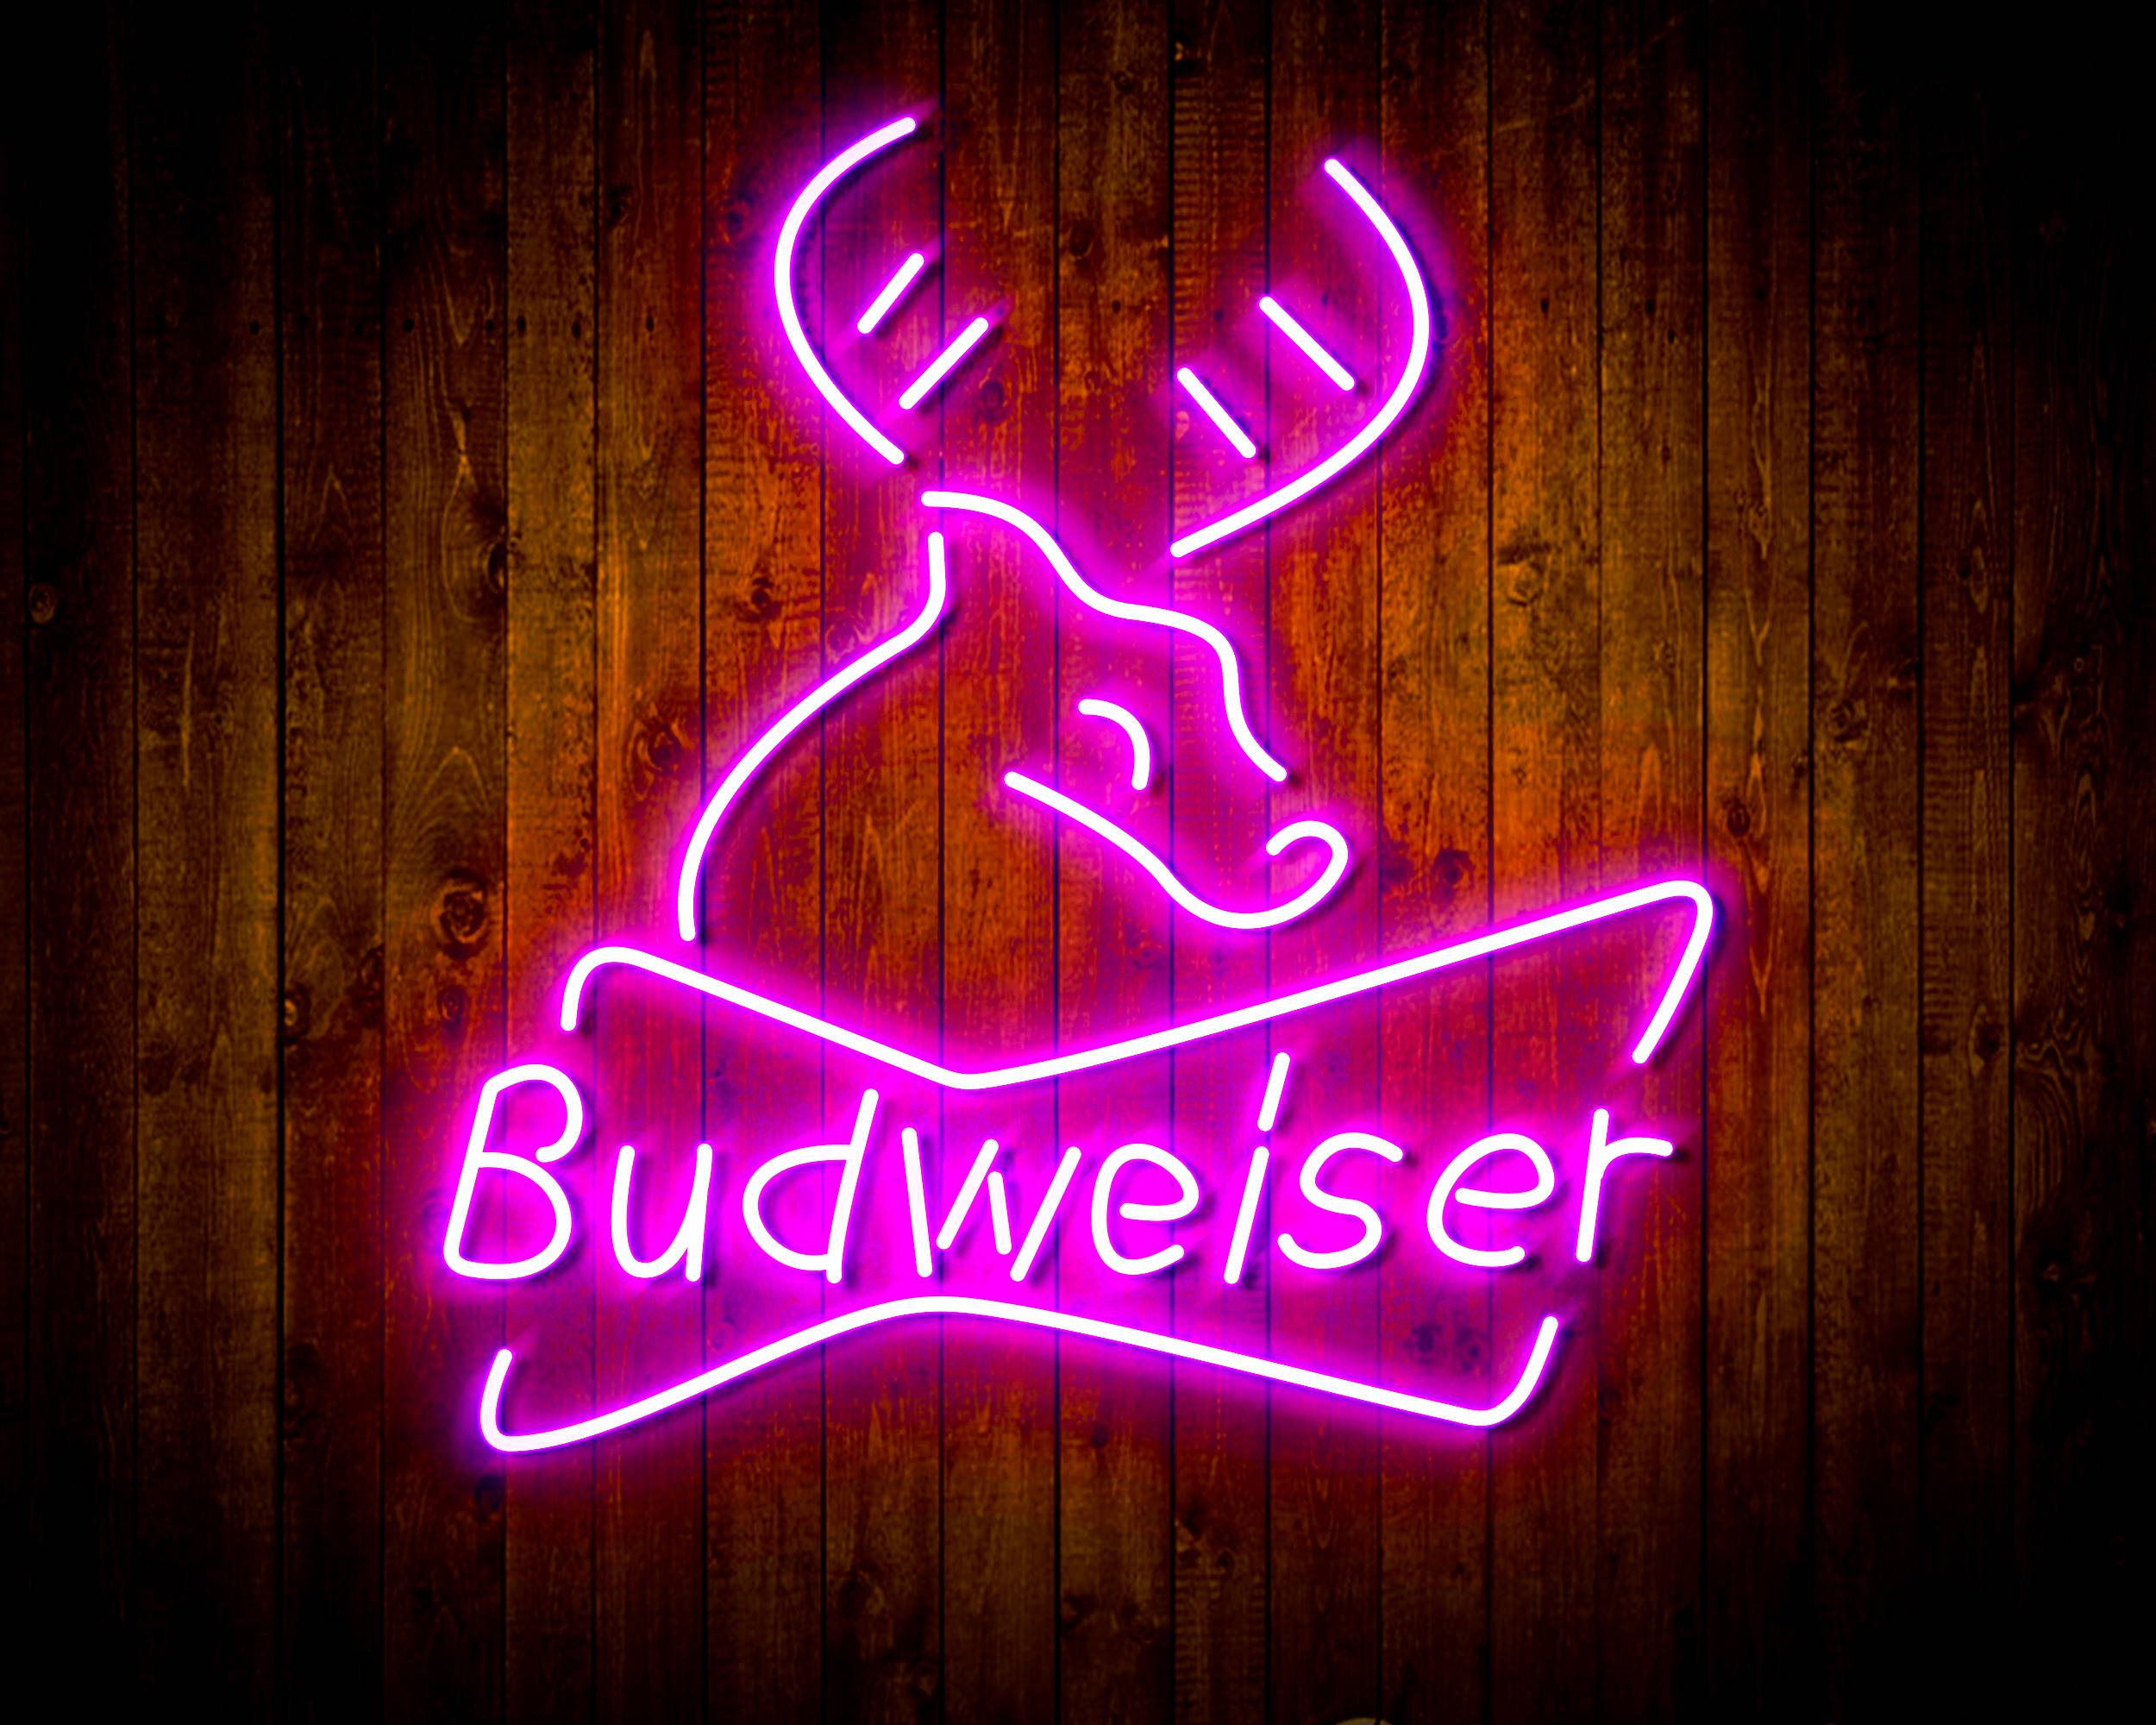 Budweiser with Deer Head Handmade LED Neon Light Sign